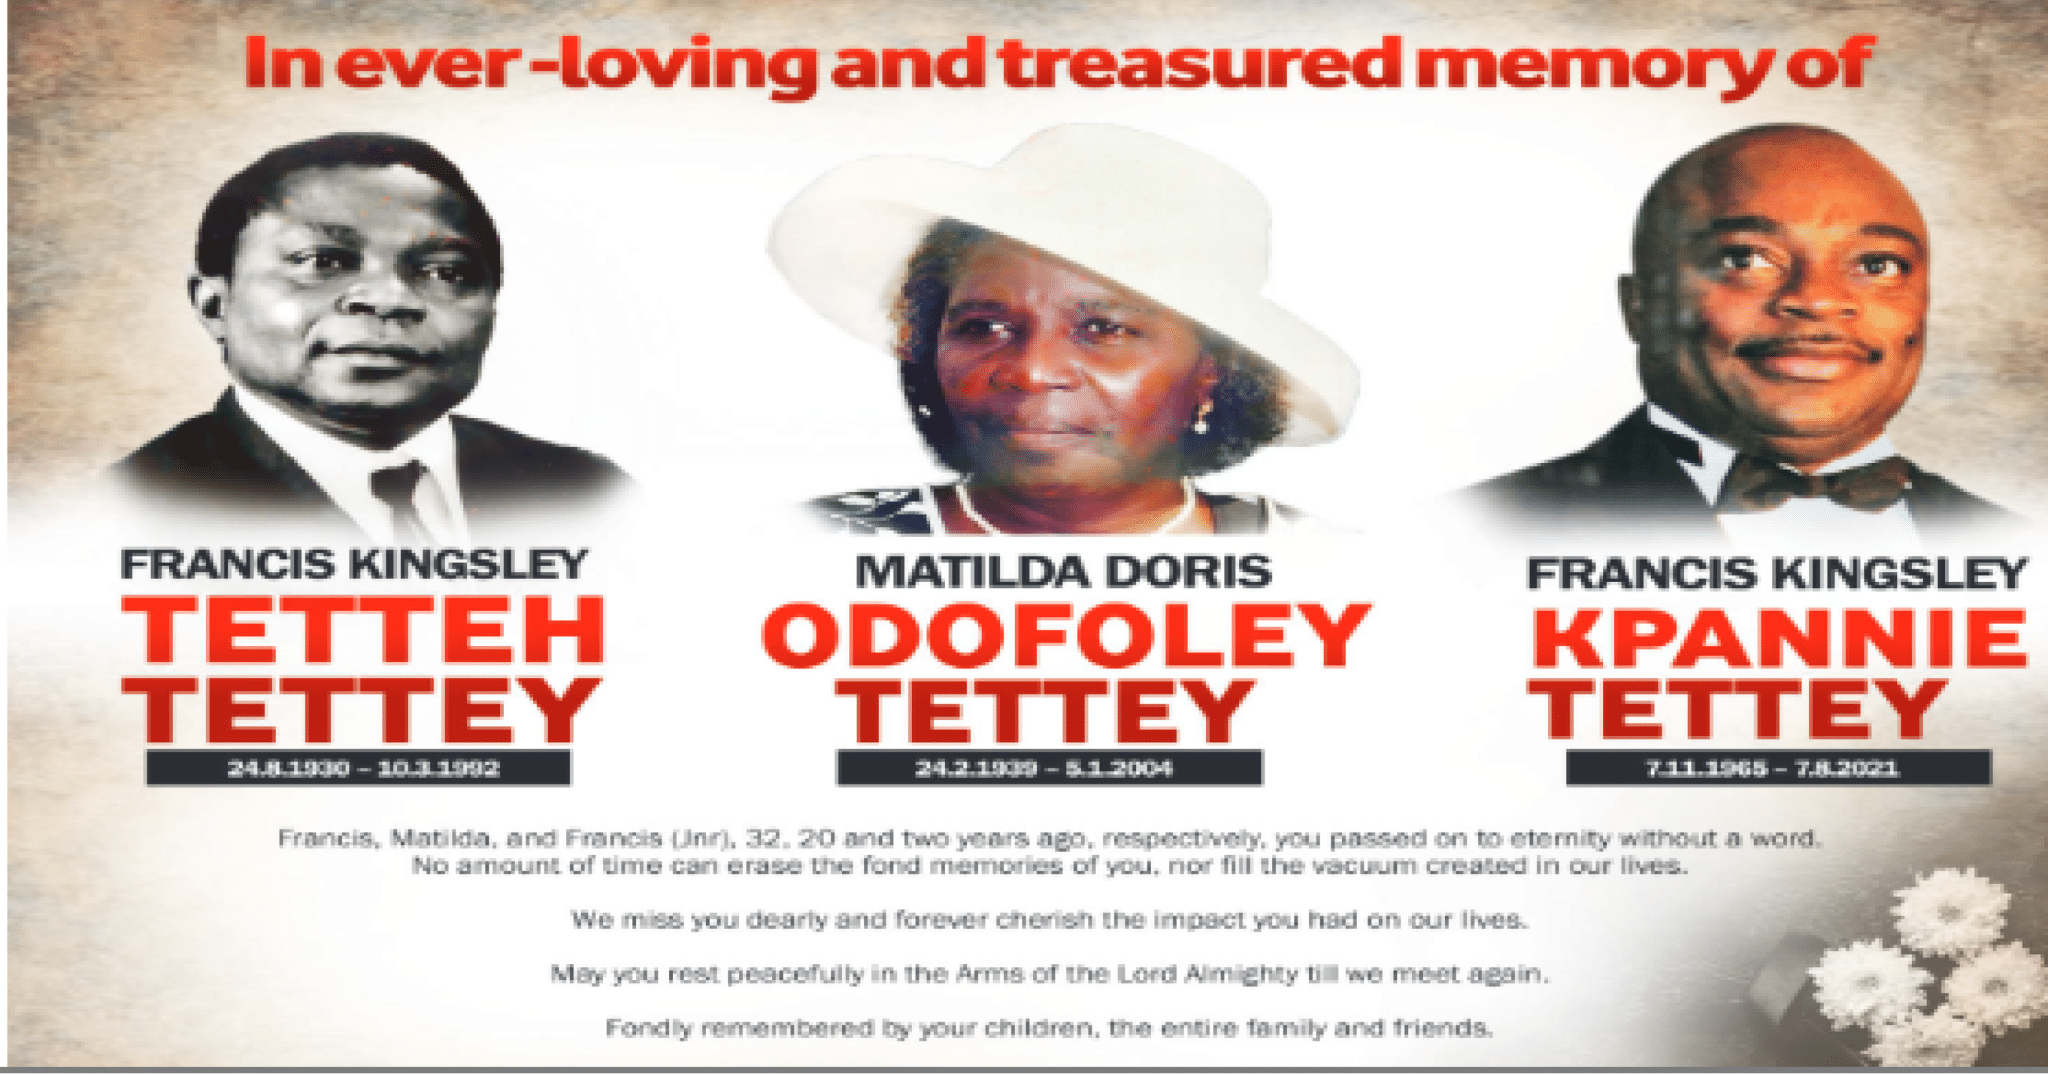 Francis Kingsley Tetteh Tettey & Matilda Odofoley Tettey & Francis Kingsley Kpannie Tettey